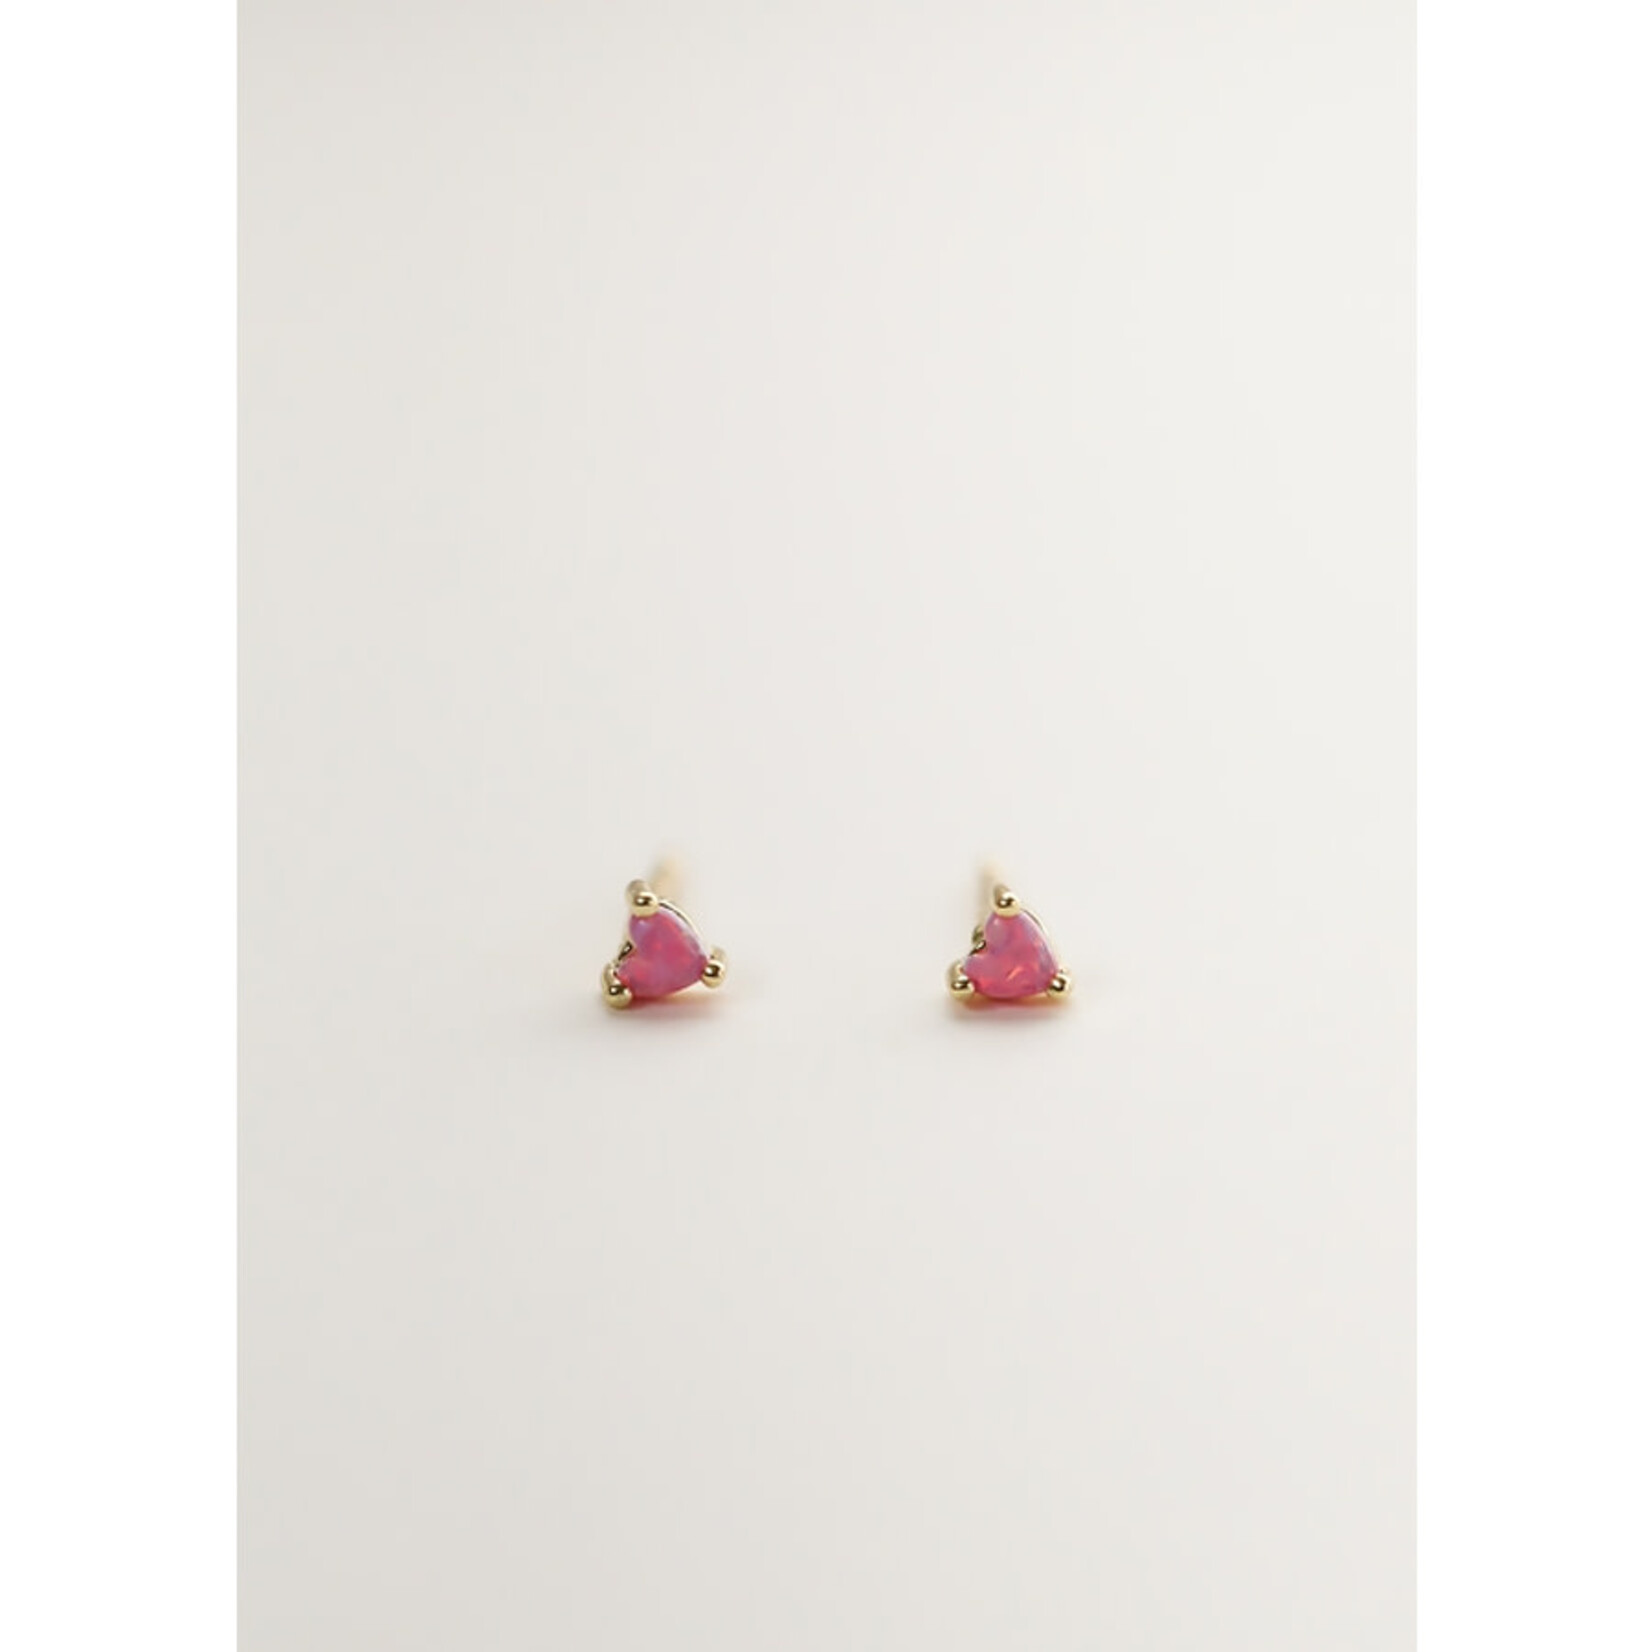 JaxKelly Tiny Opal Heart Earrings